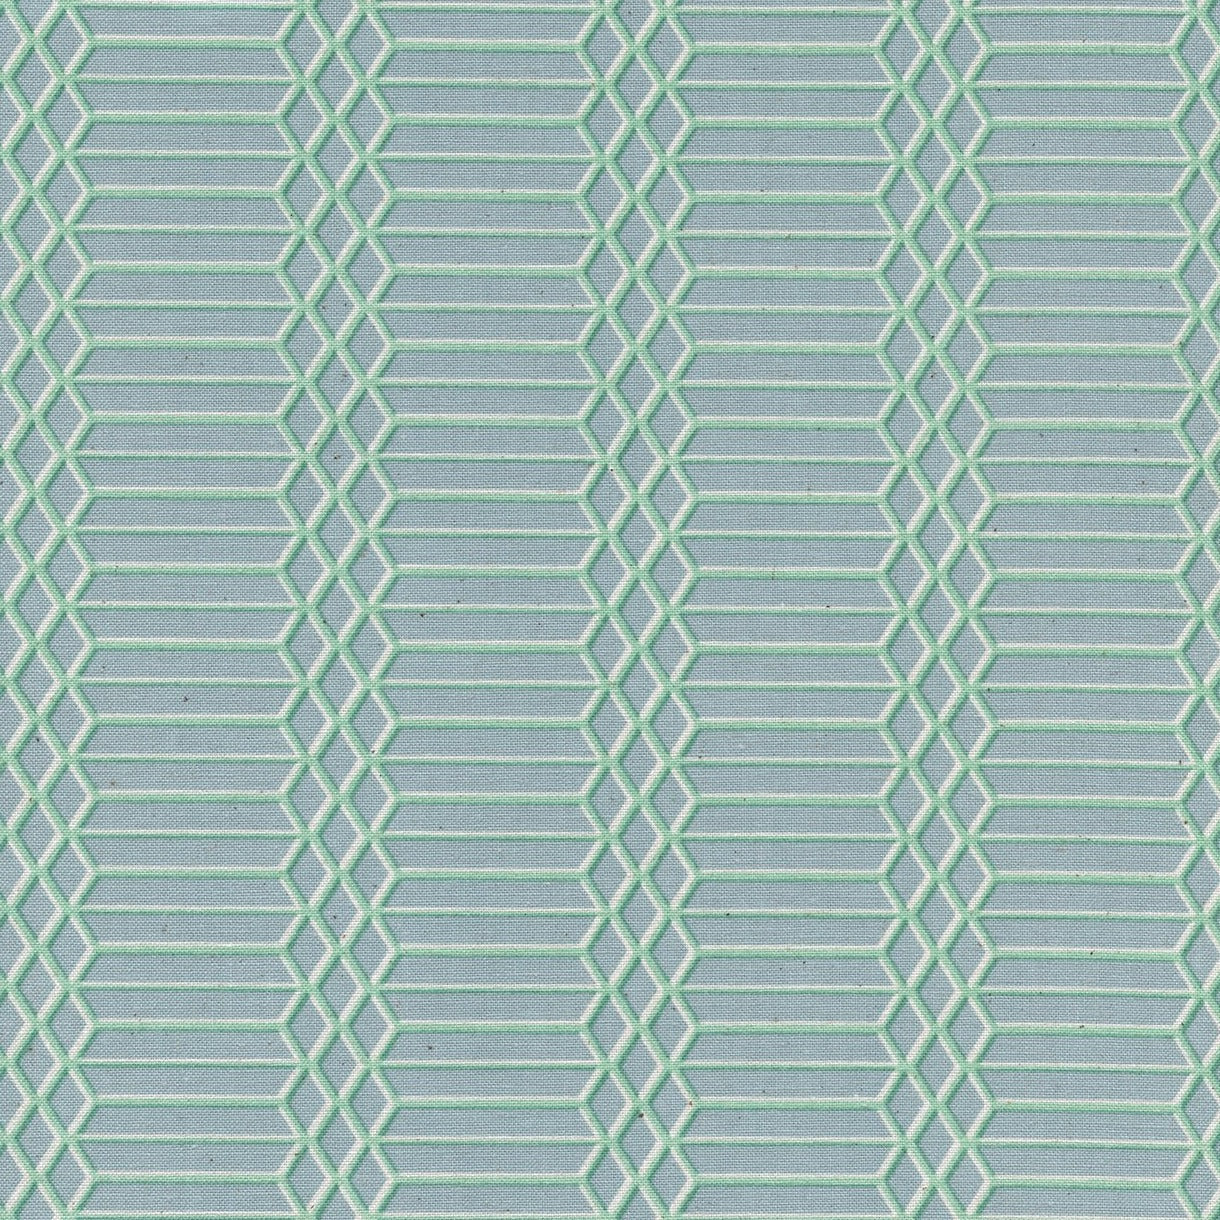 Panorama - Dandy Bars - Aqua - Unbleached Cotton Fabric